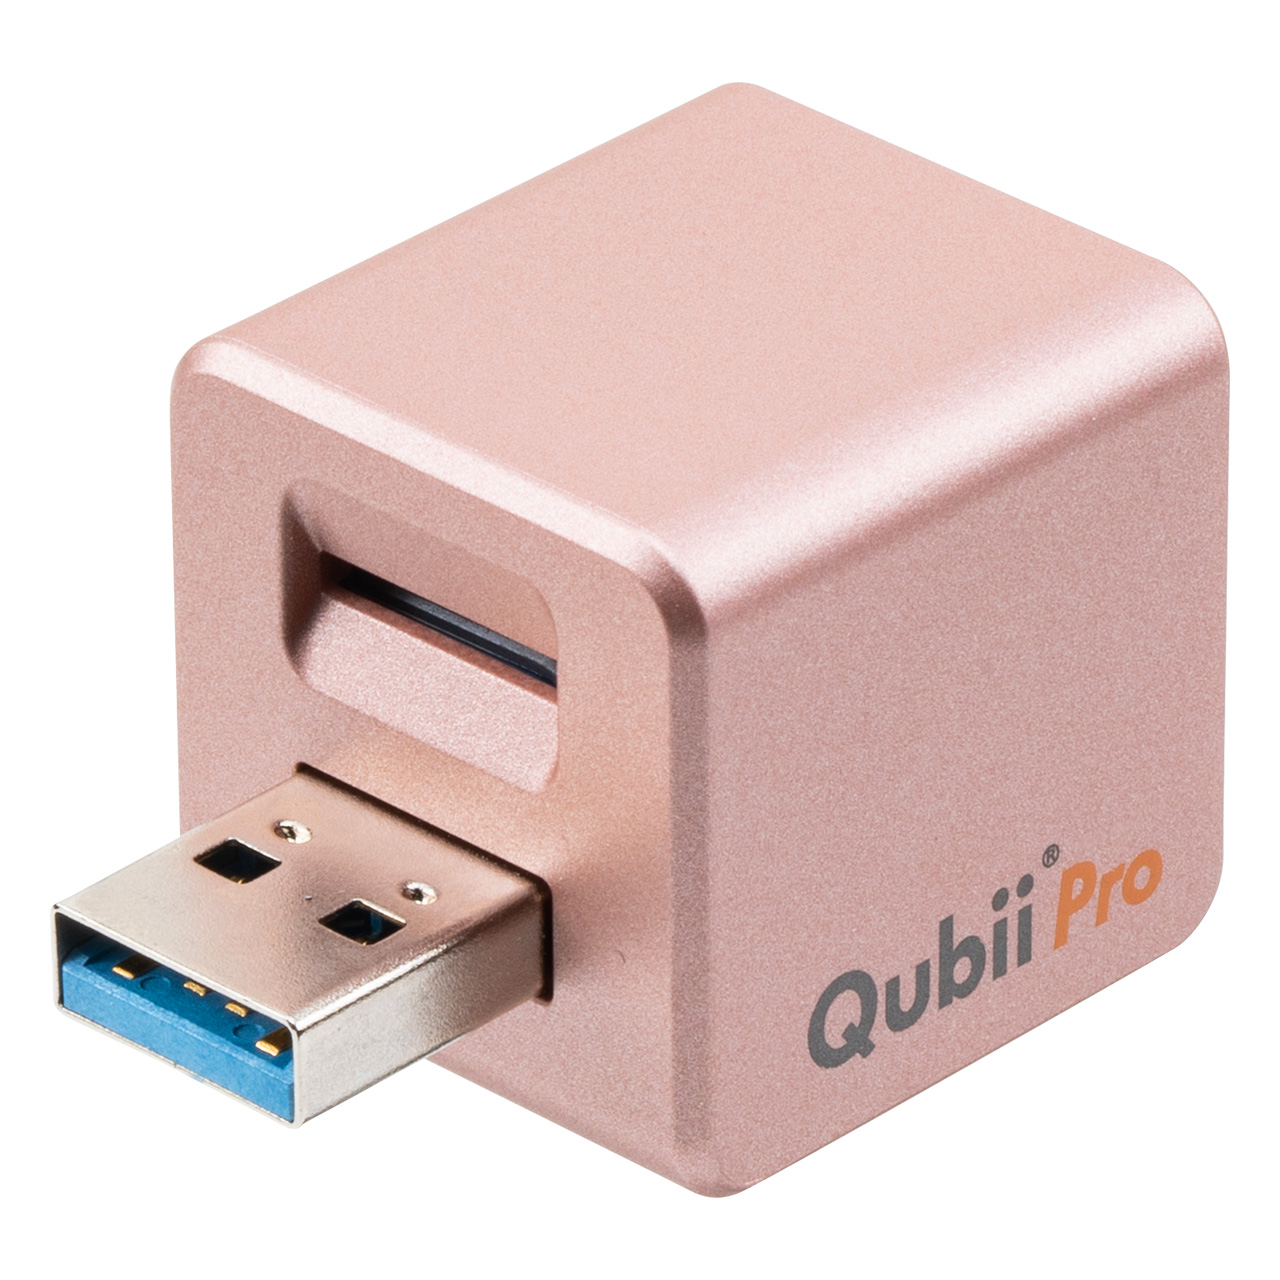 iPhone バックアップ Qubii Pro iPhone カードリーダー microSD iPad 充電 自動バックアップ 簡単接続 USB3.1  Gen1 動画 写真 データ保存 400-ADRIP011